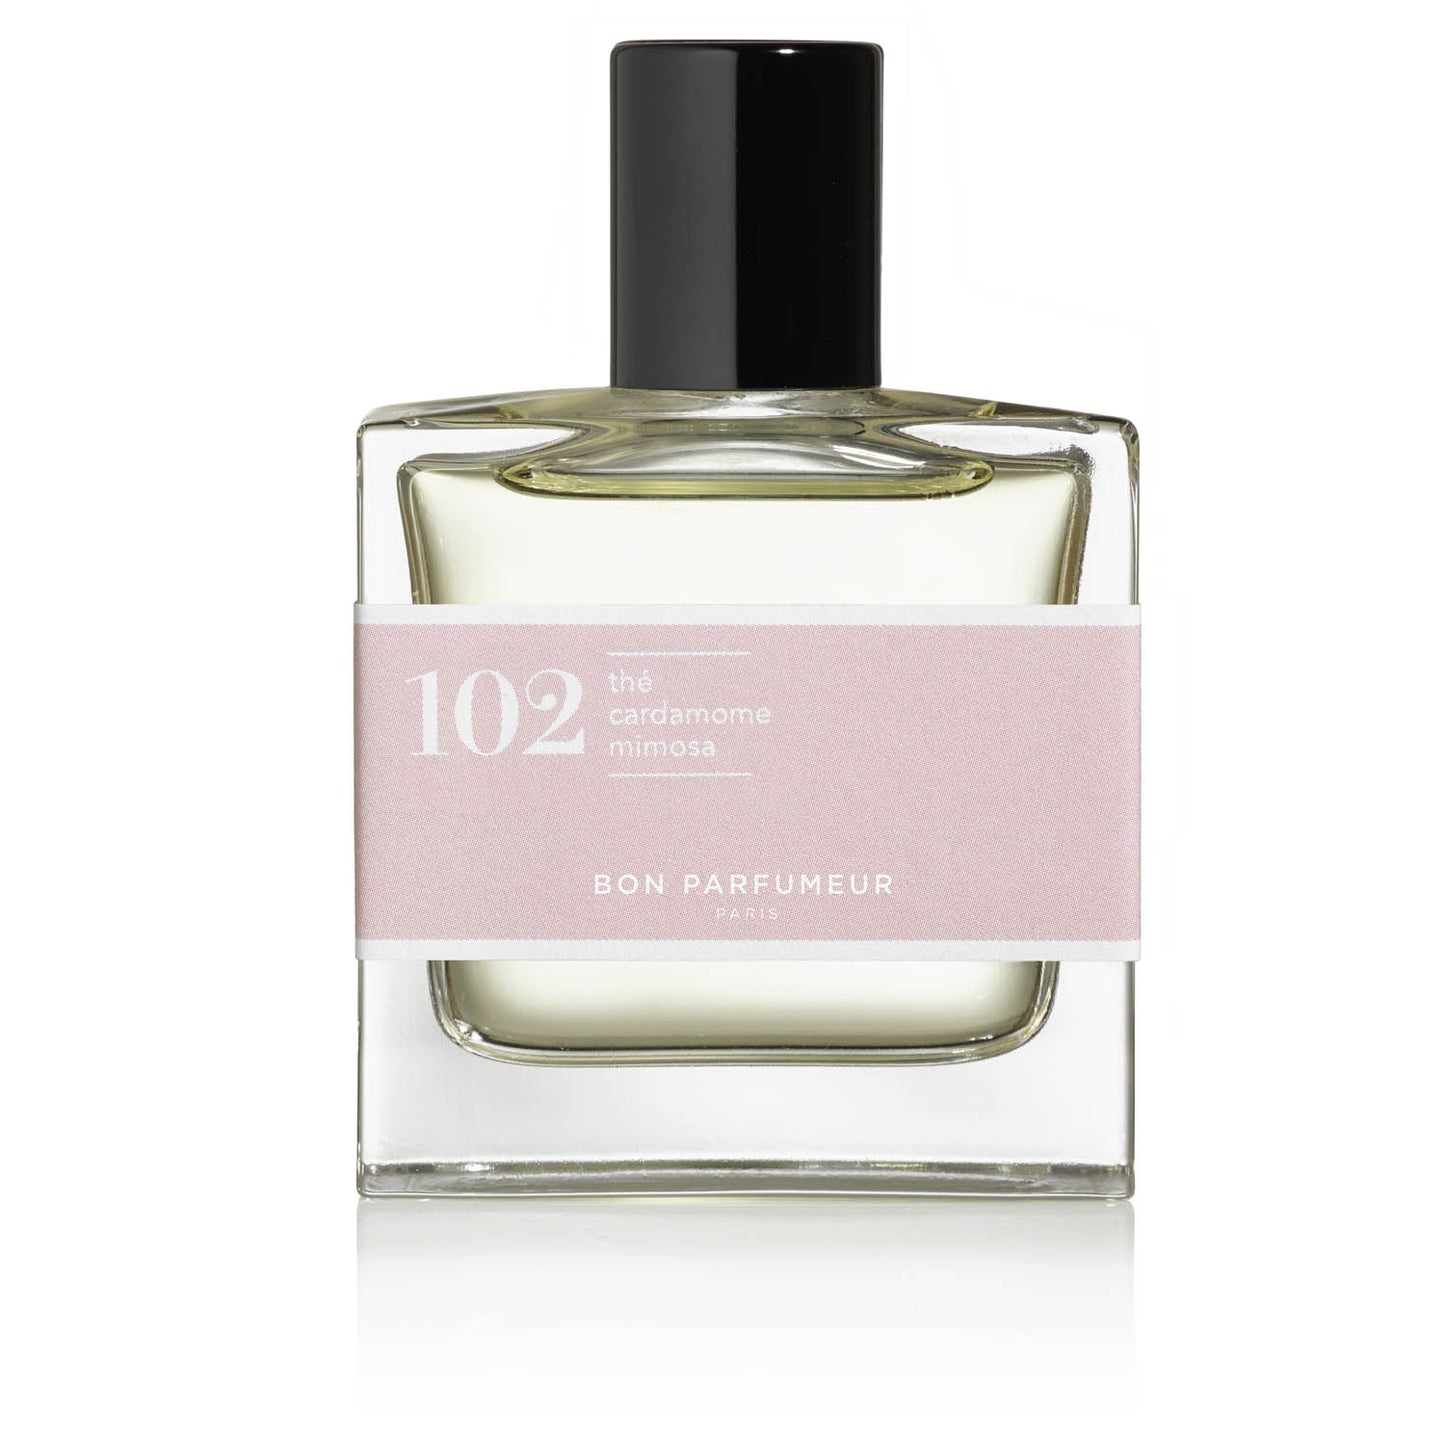 bon parfumeur, bon parfumeur paris, 102